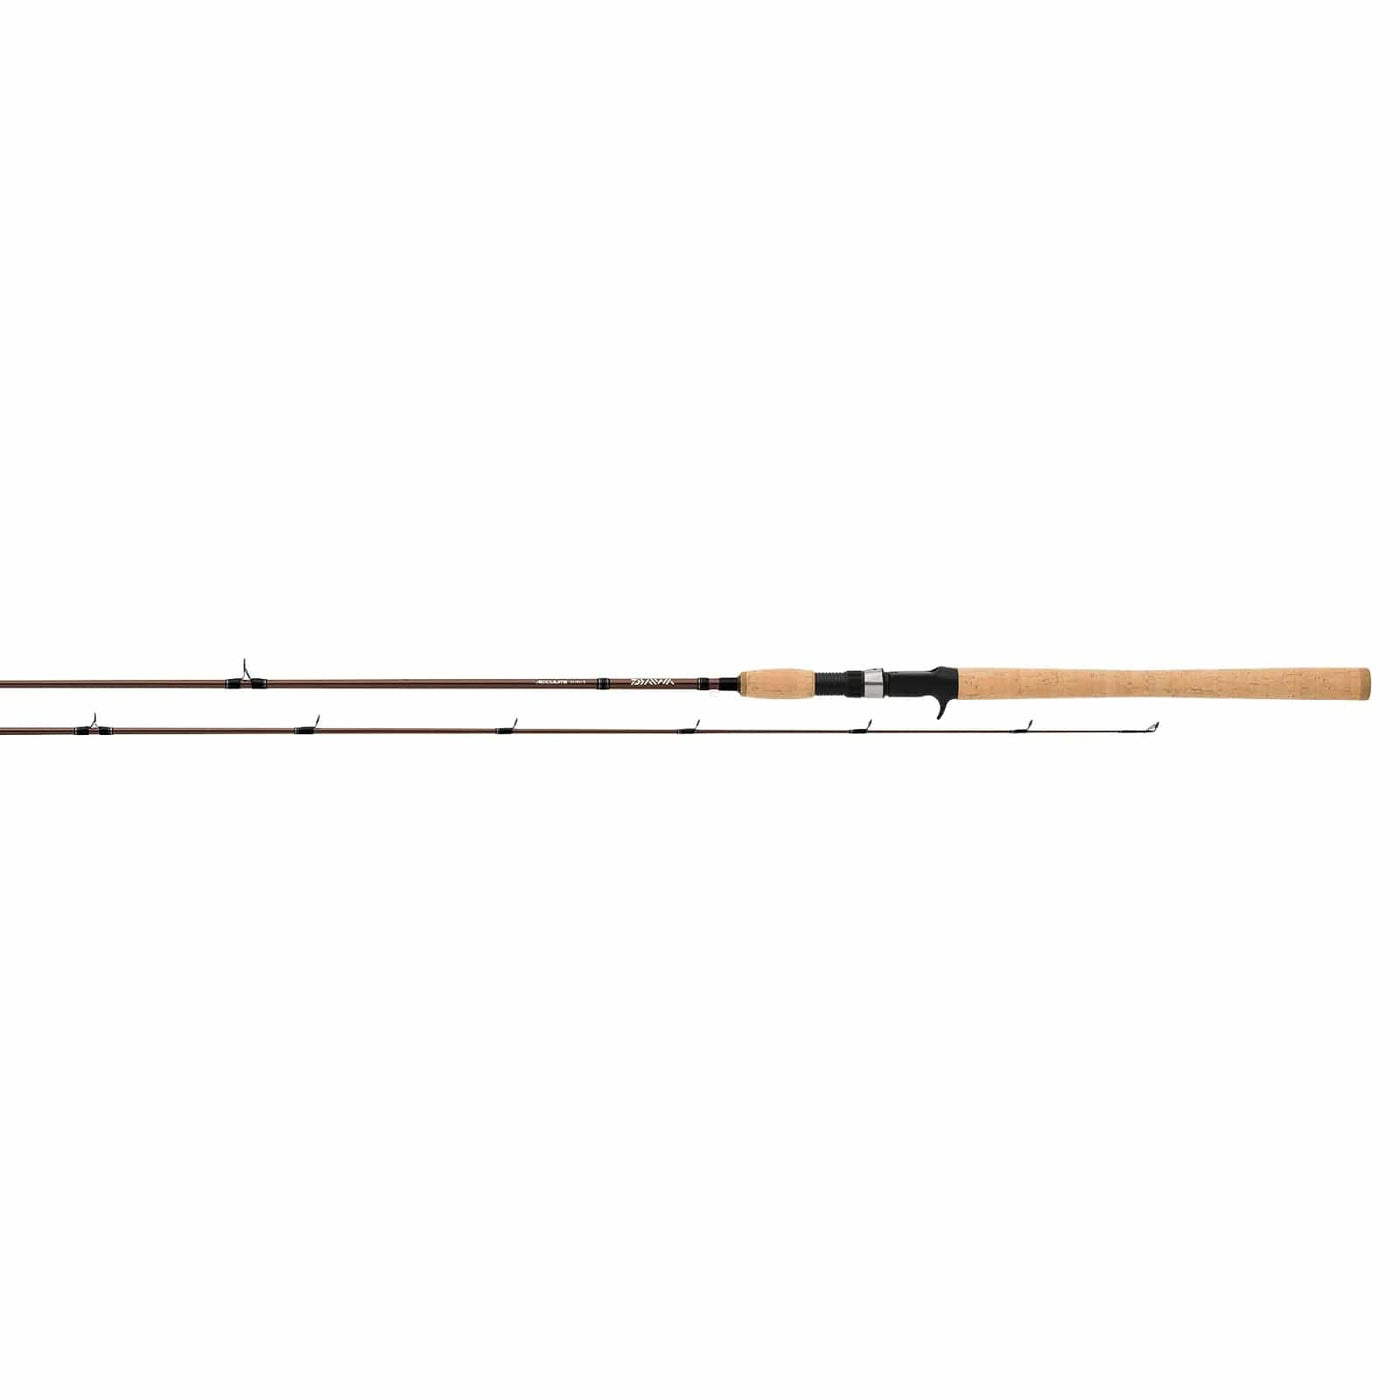 Daiwa Daiwa Acculite Spinning Rod ACLT902LSS 9 ft 2 pc Fishing